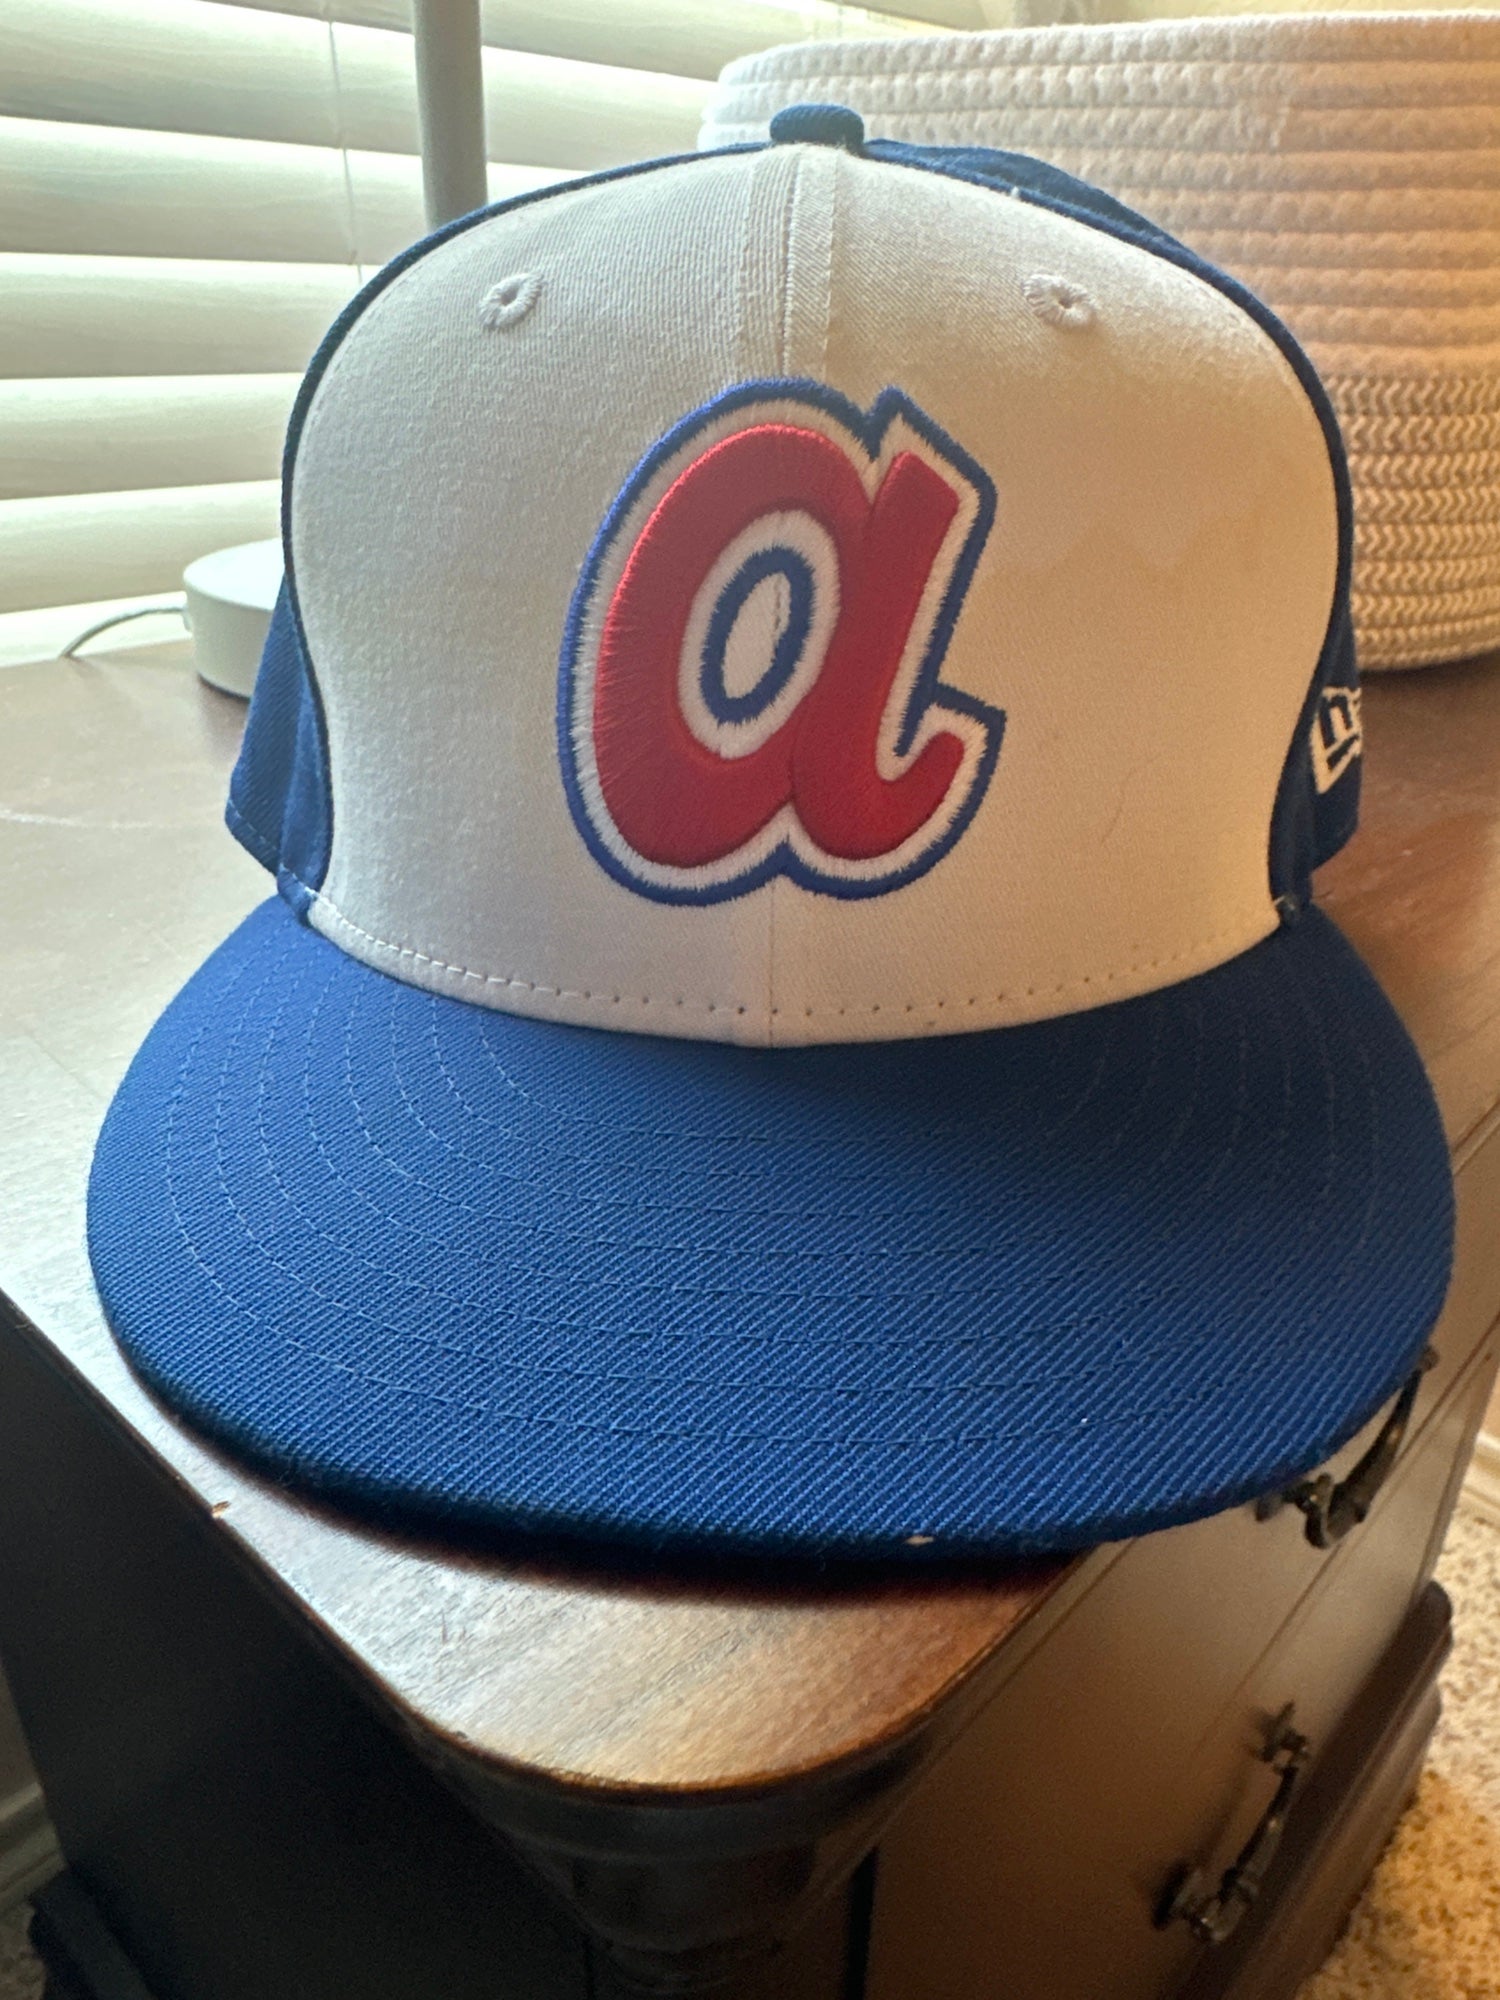 Atlanta Braves New Era 9FIFTY Cooperstown Feather Snapback Hat Cap 950 Retro